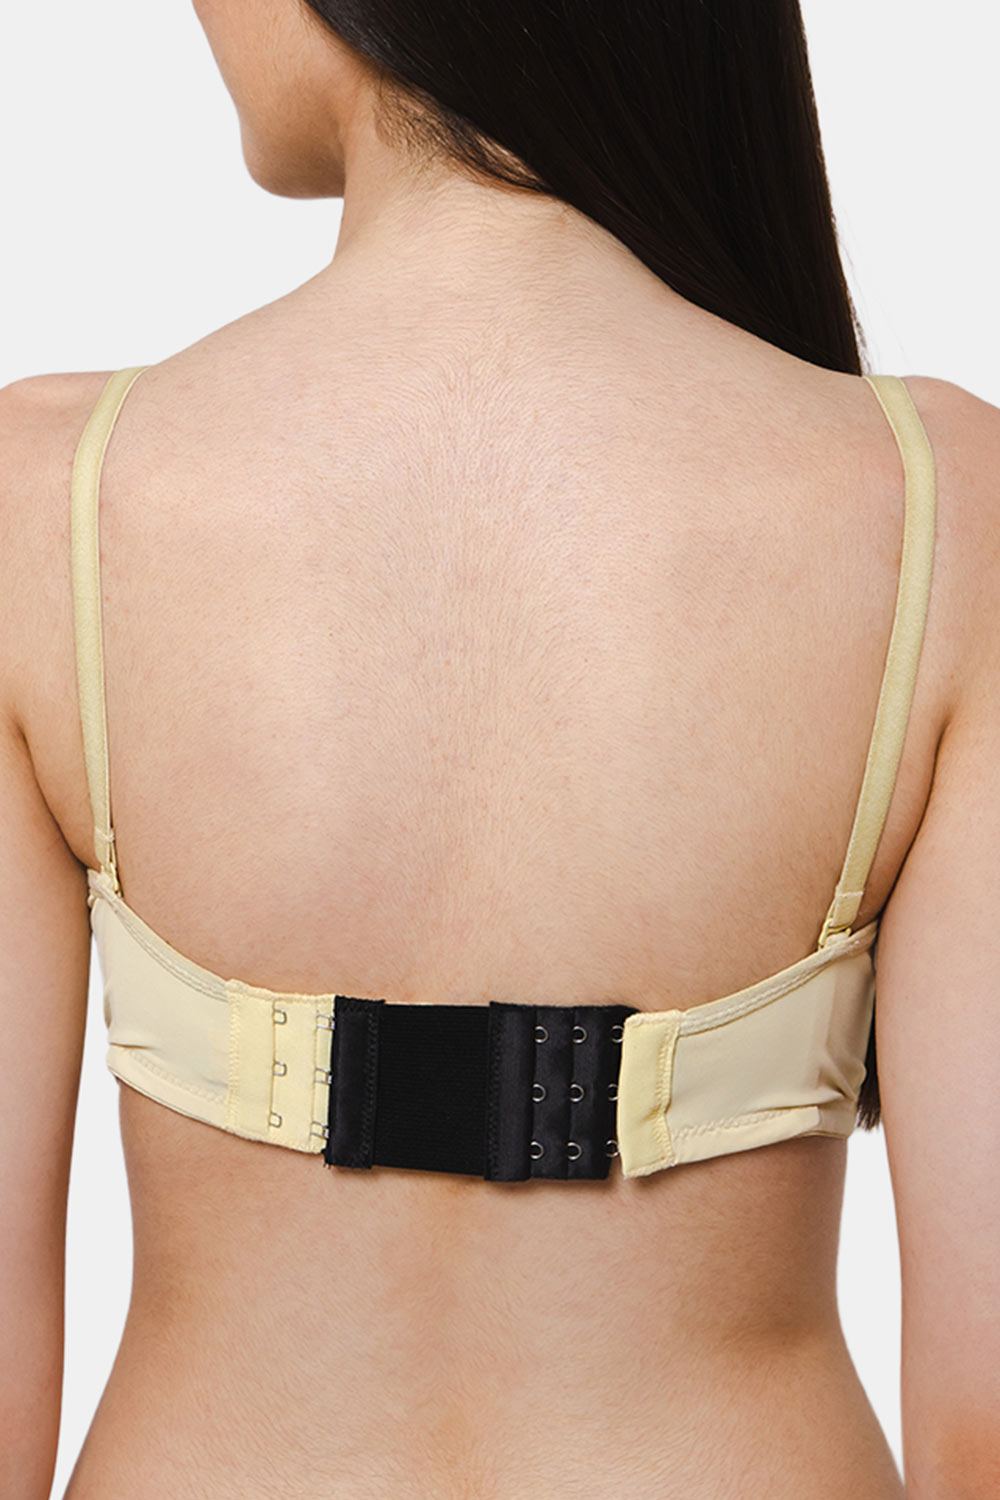 Bra Extender 3 Hooks 3 Row 3 pack Bra Strap Band Extension - Soft  Comfortable Adjustable - Women's Bras Accessories 